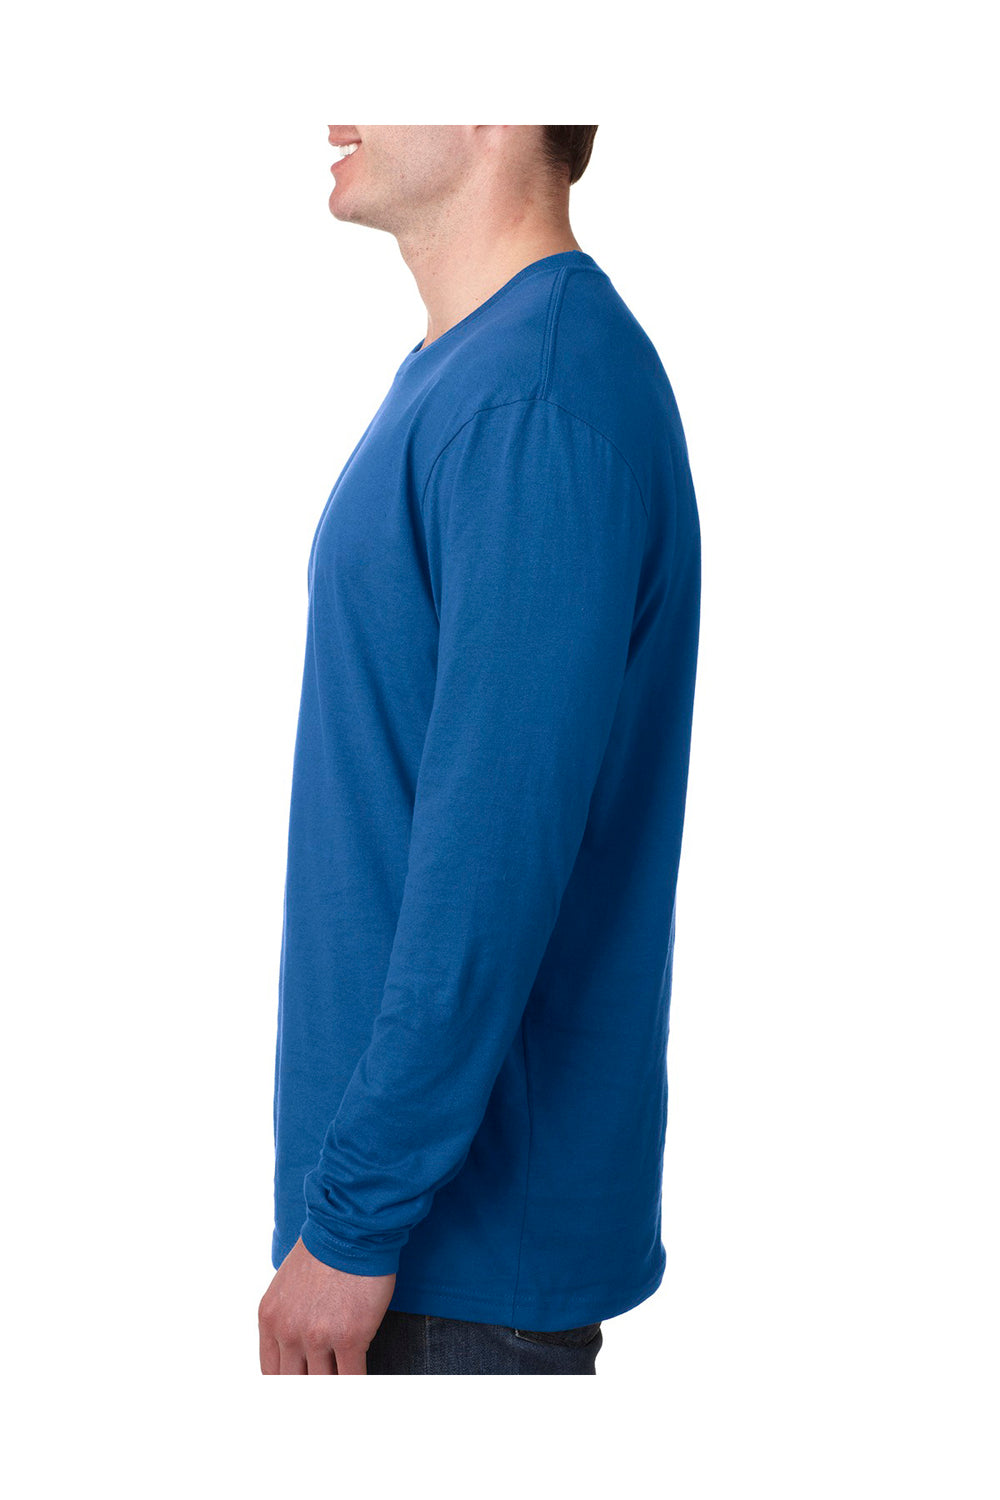 Next Level N3601 Mens Fine Jersey Long Sleeve Crewneck T-Shirt Cool Blue Side